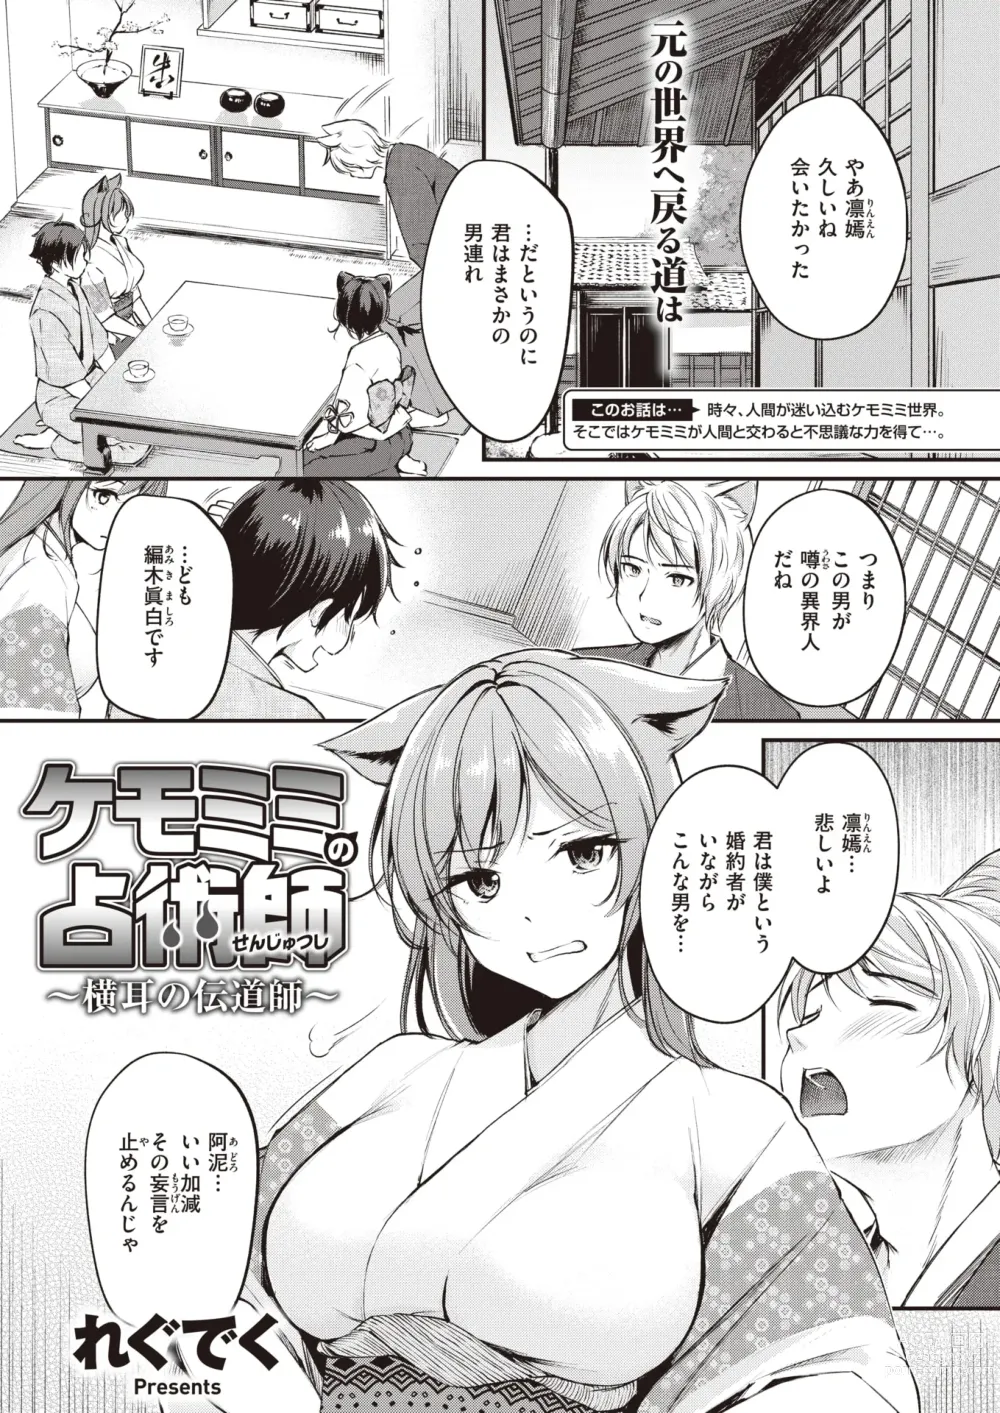 Page 26 of manga Isekai Rakuten Vol. 23